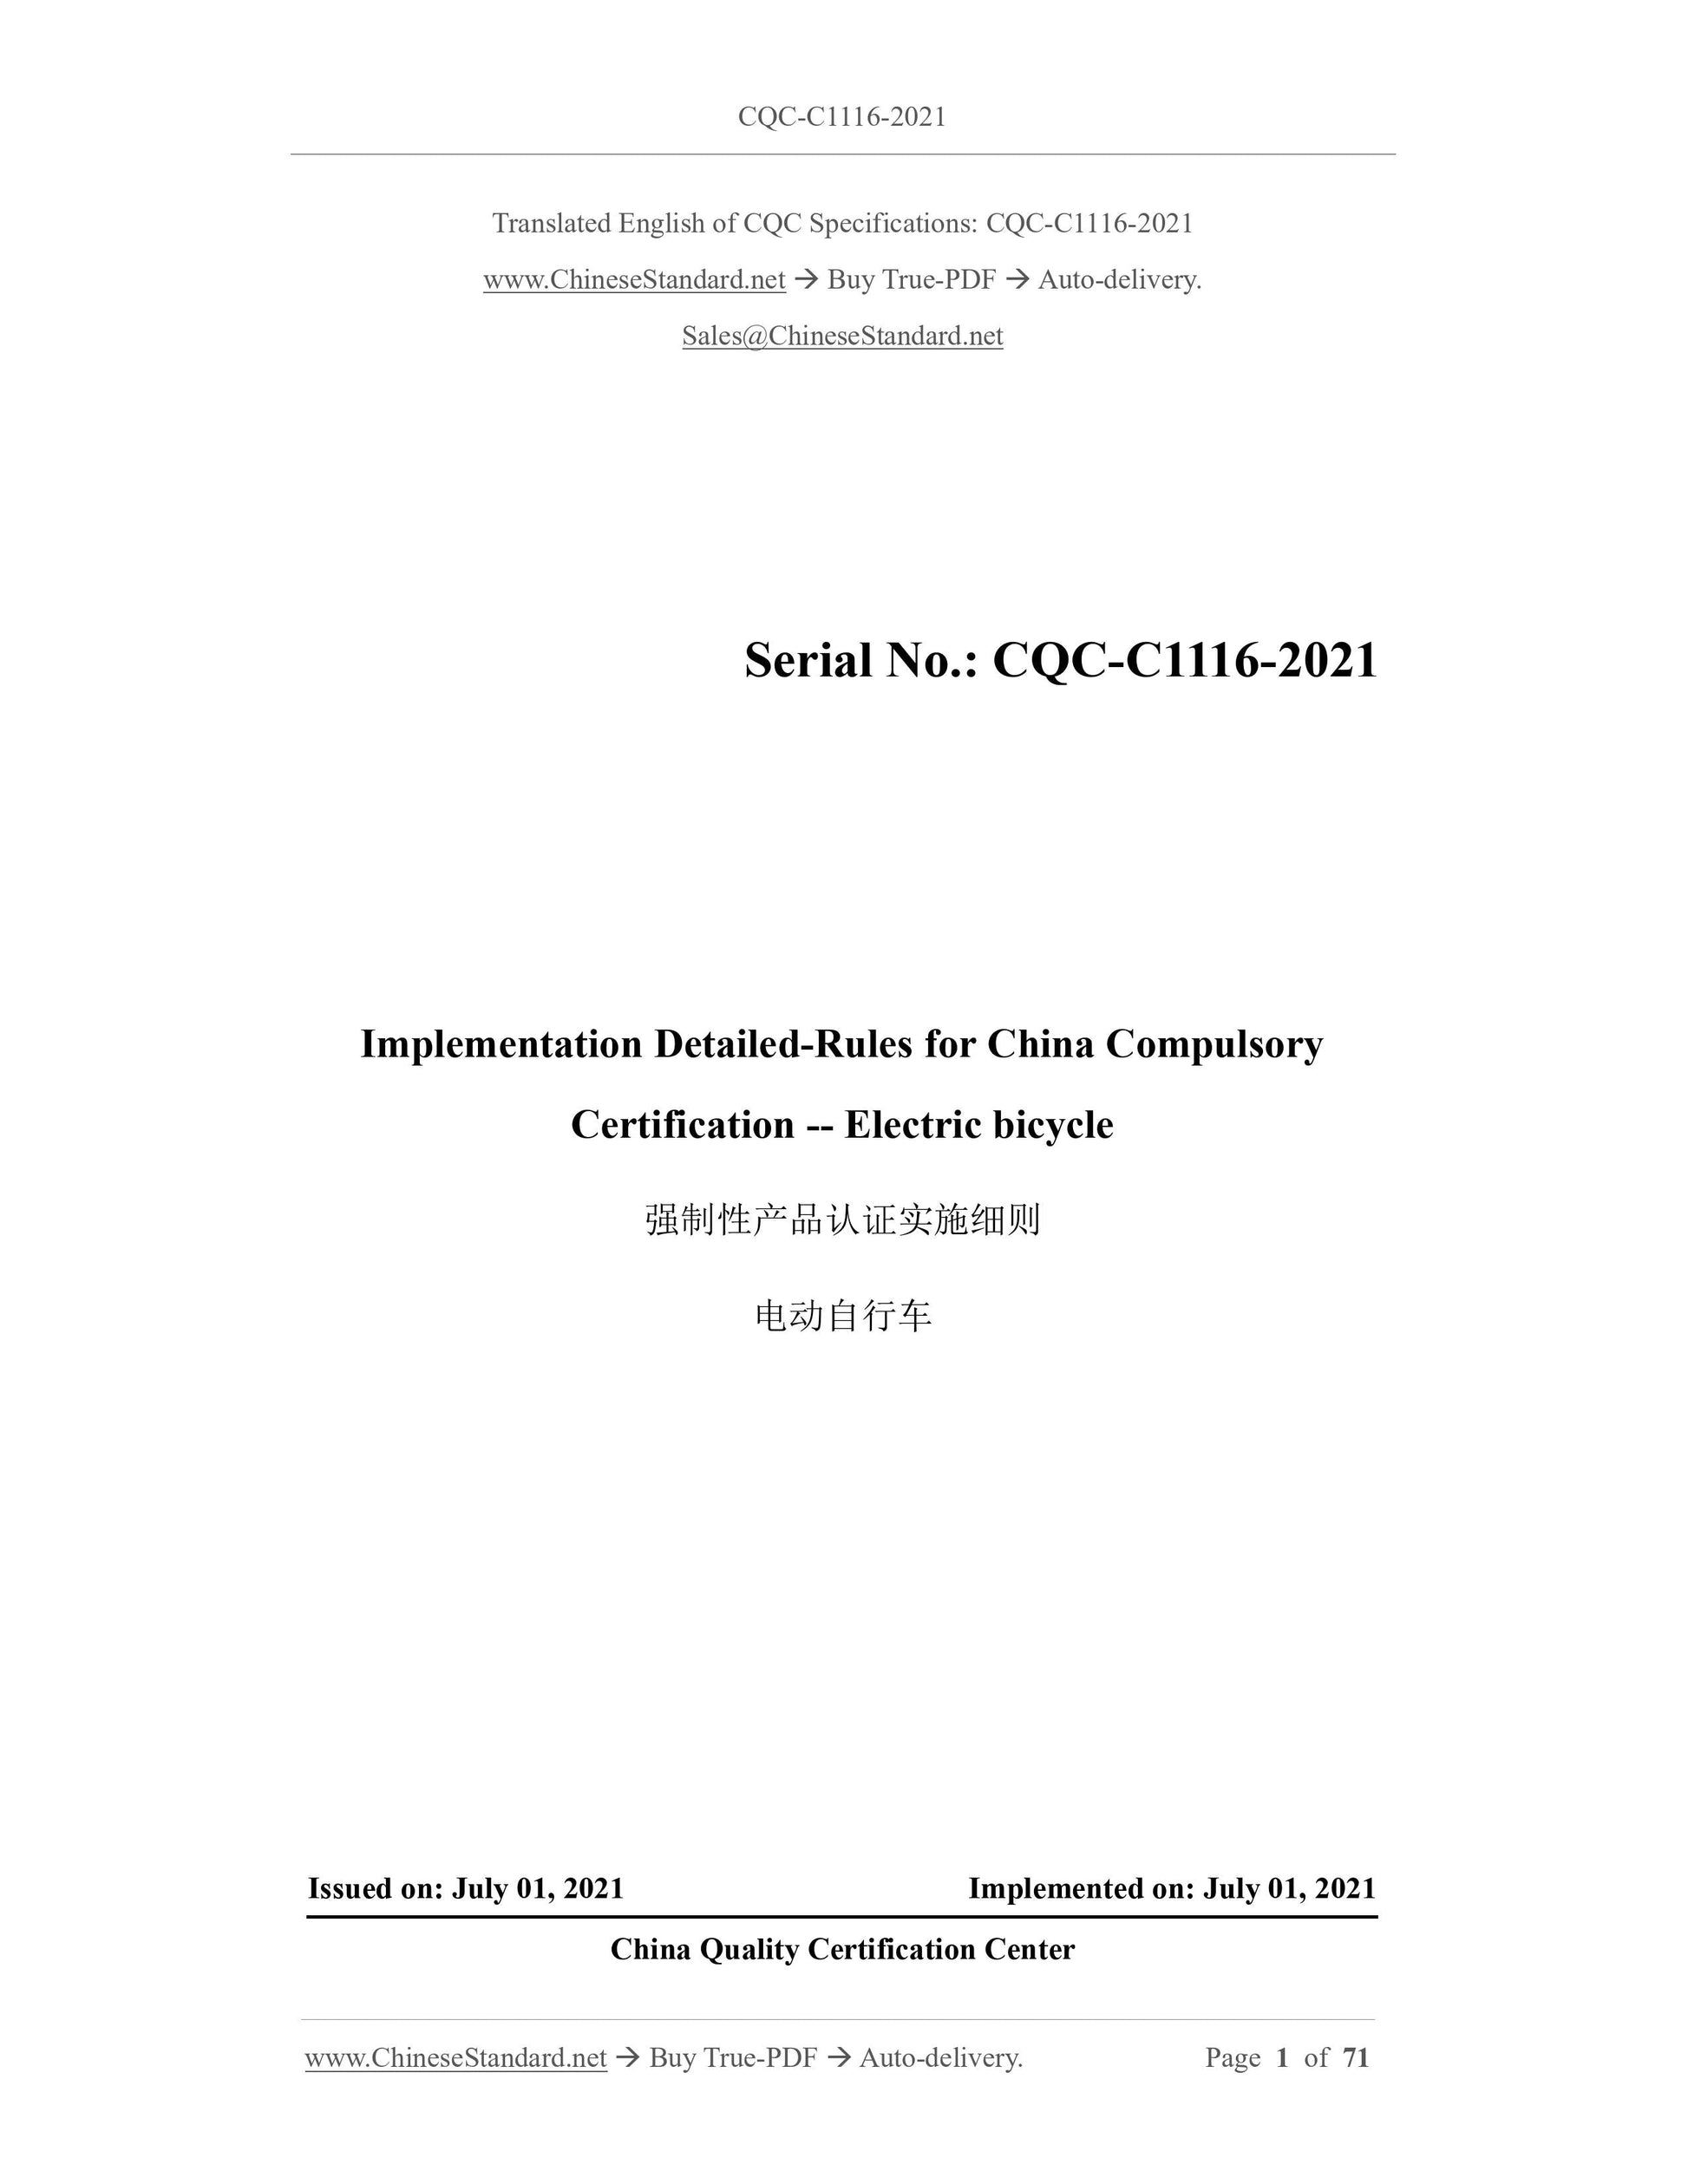 CQC-C1116-2021 Page 1